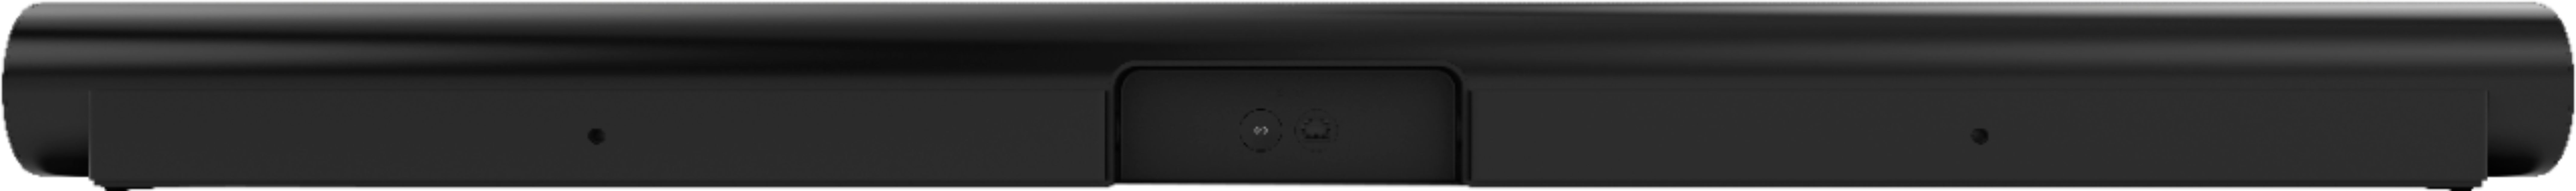 Back View: Sonos - Arc Soundbar with Dolby Atmos, Google Assistant and Amazon Alexa - Black